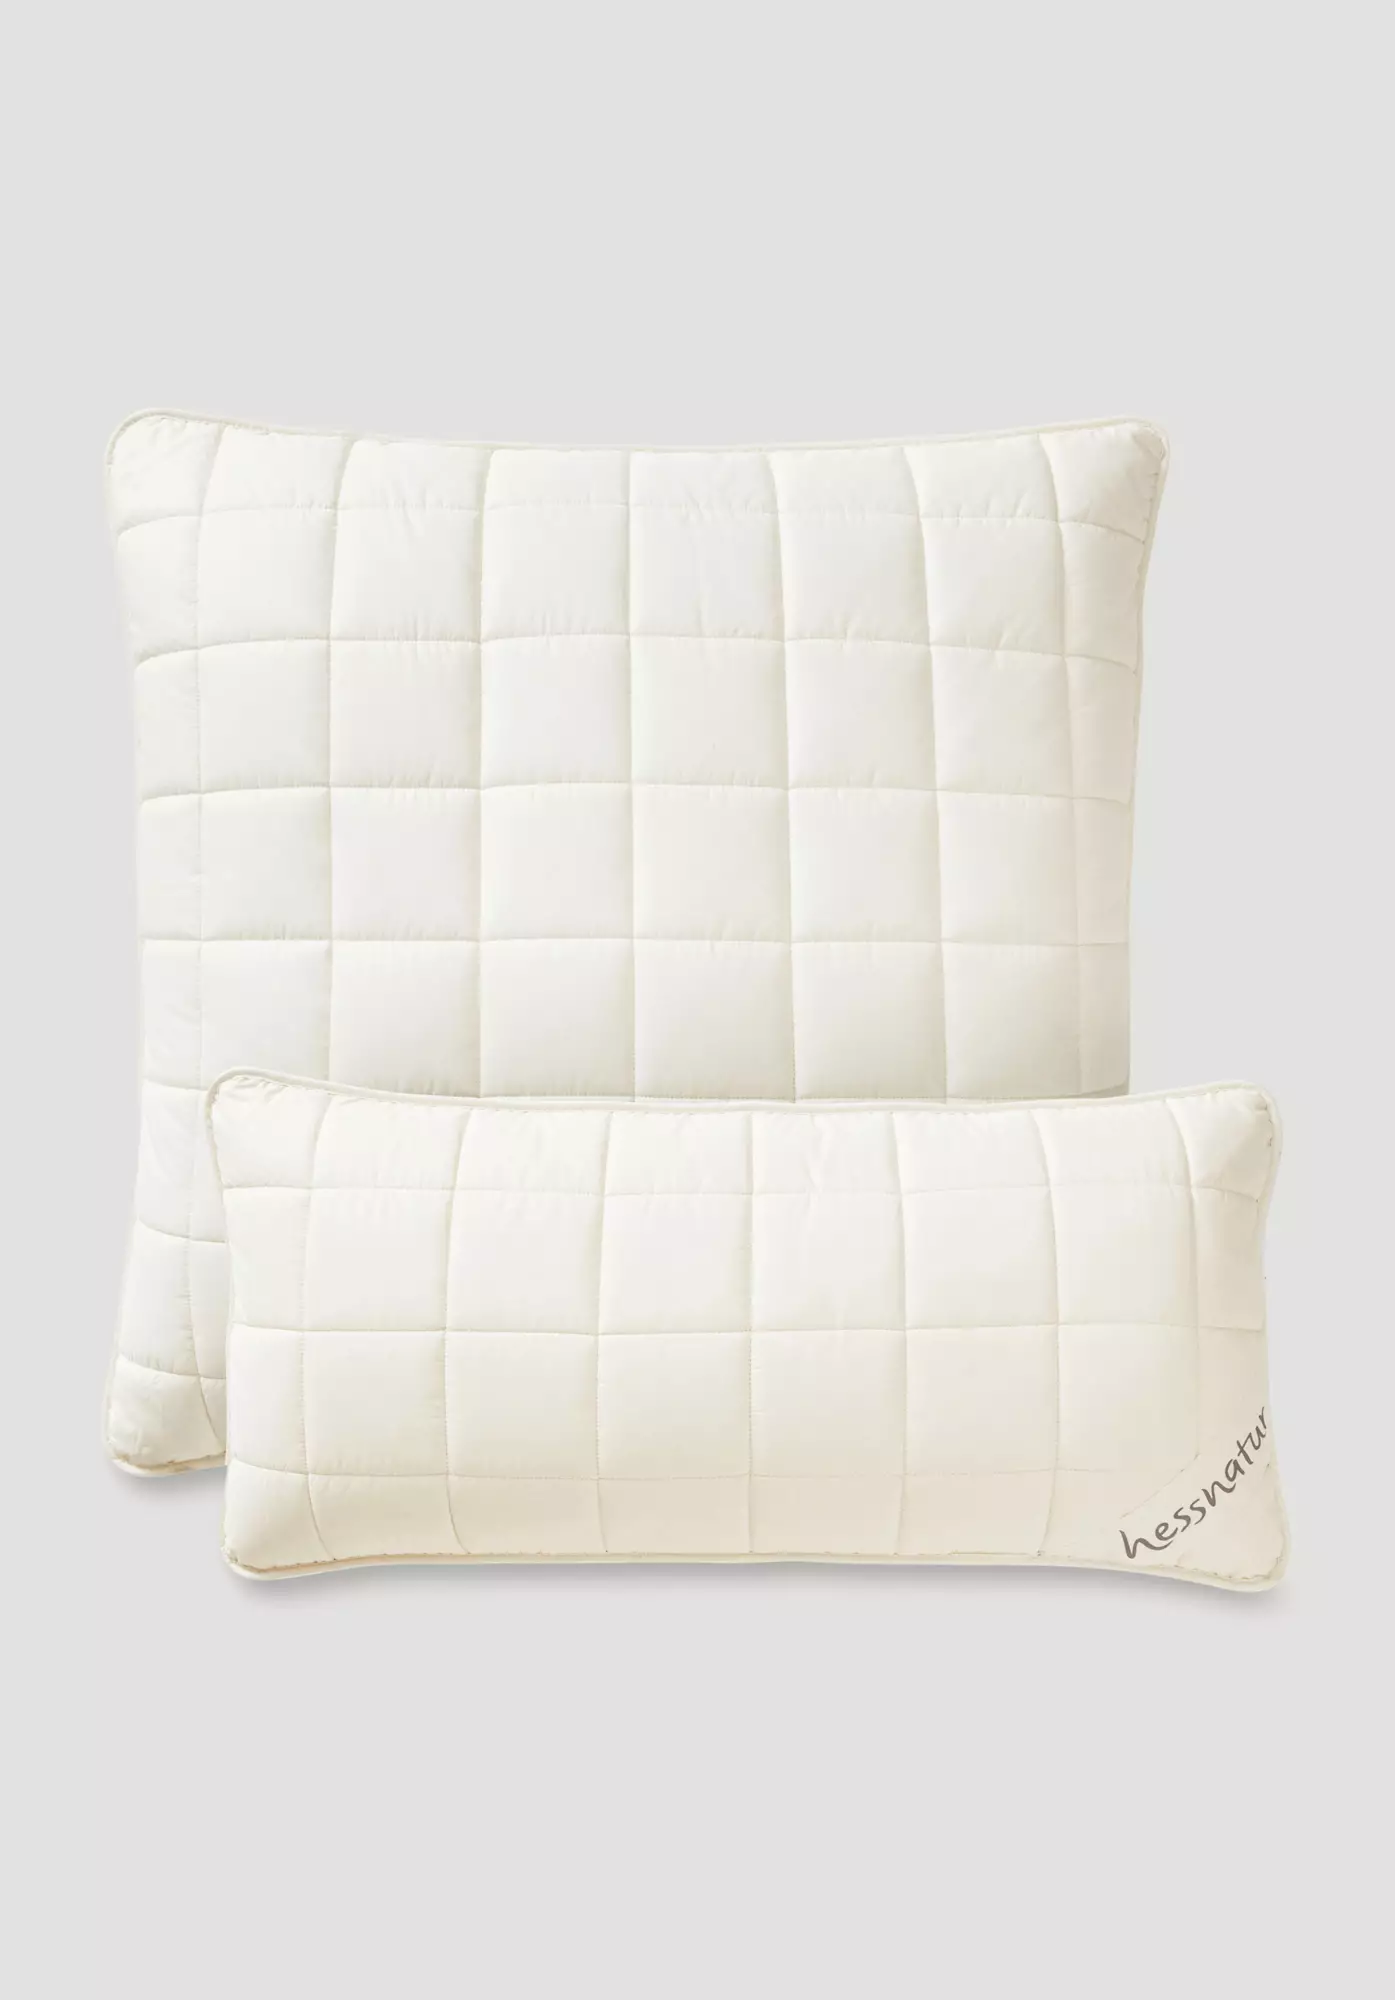 Pillows with hemp and organic cotton - 1